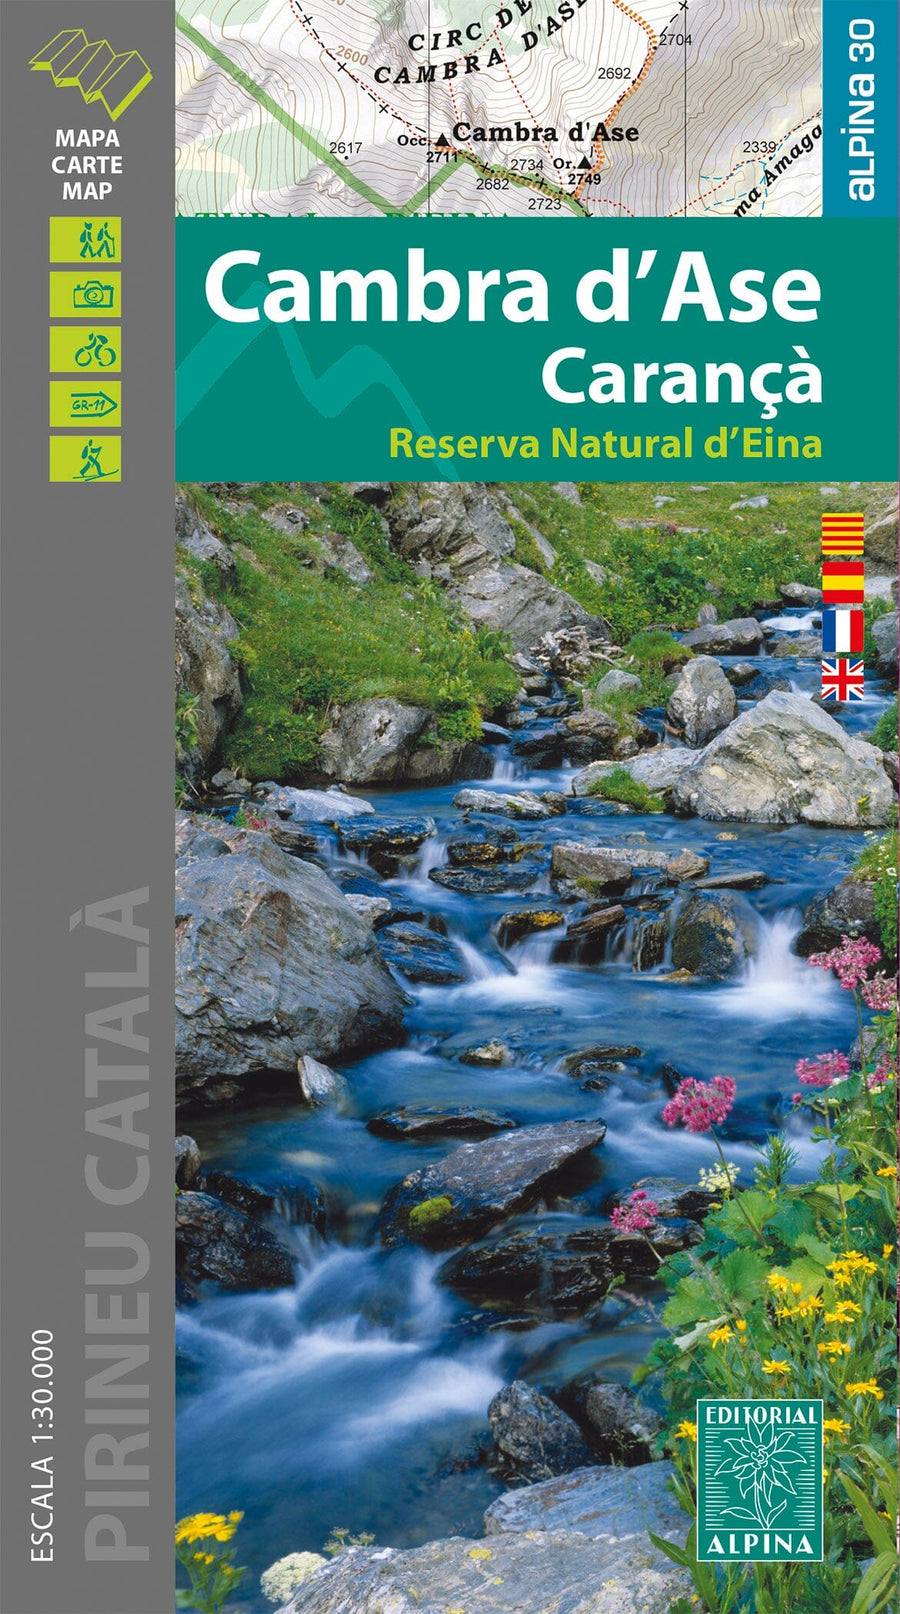 Carte de randonnée - Cambra d'Ase, Carança, Reserva natural d'Eina (Pyrénées catalanes) | Editorial Alpina carte pliée Editorial Alpina 